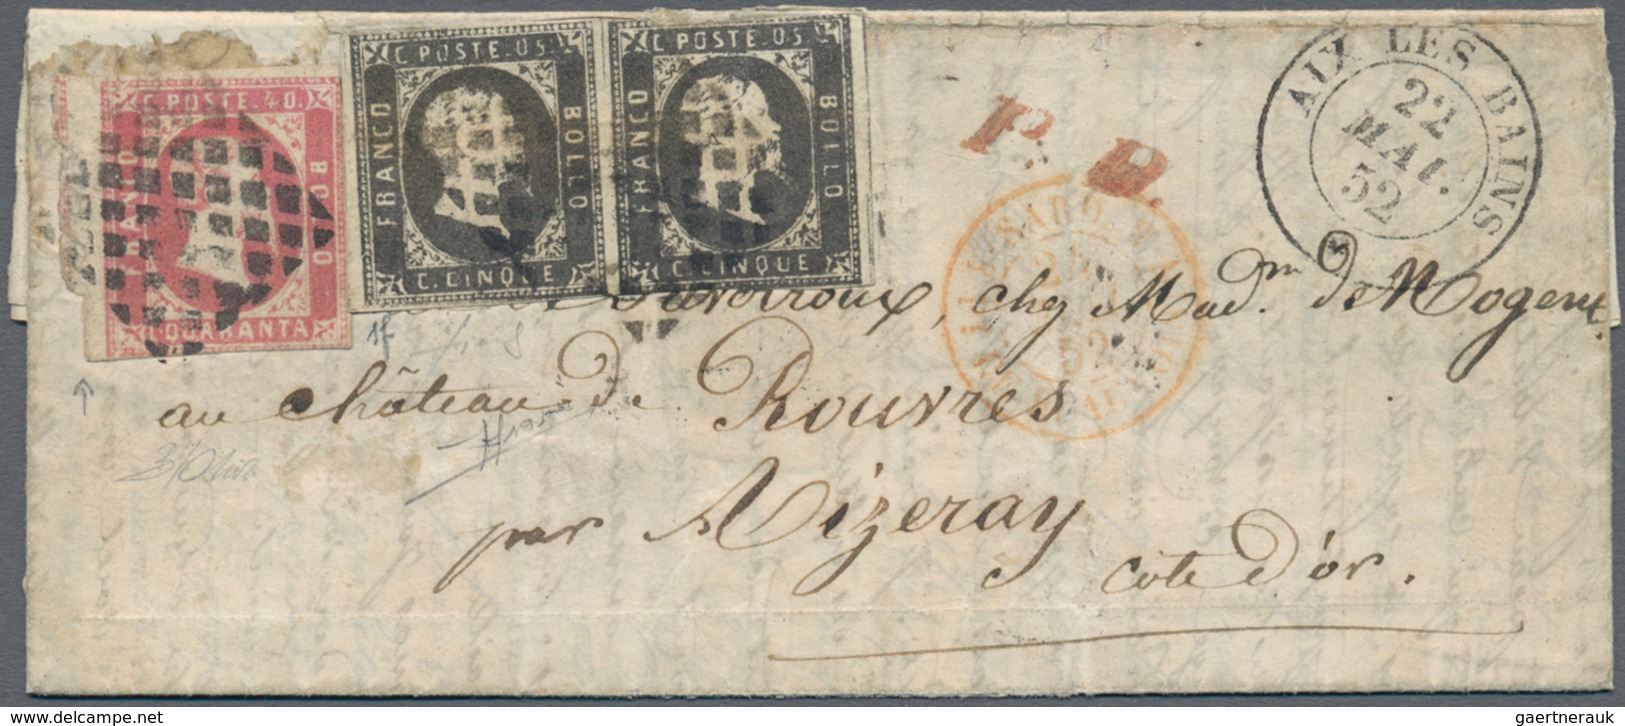 Italien - Altitalienische Staaten: Sardinien: 1851: 5 Cents, Sepia Black, First Print, Horizontal Pa - Sardinië